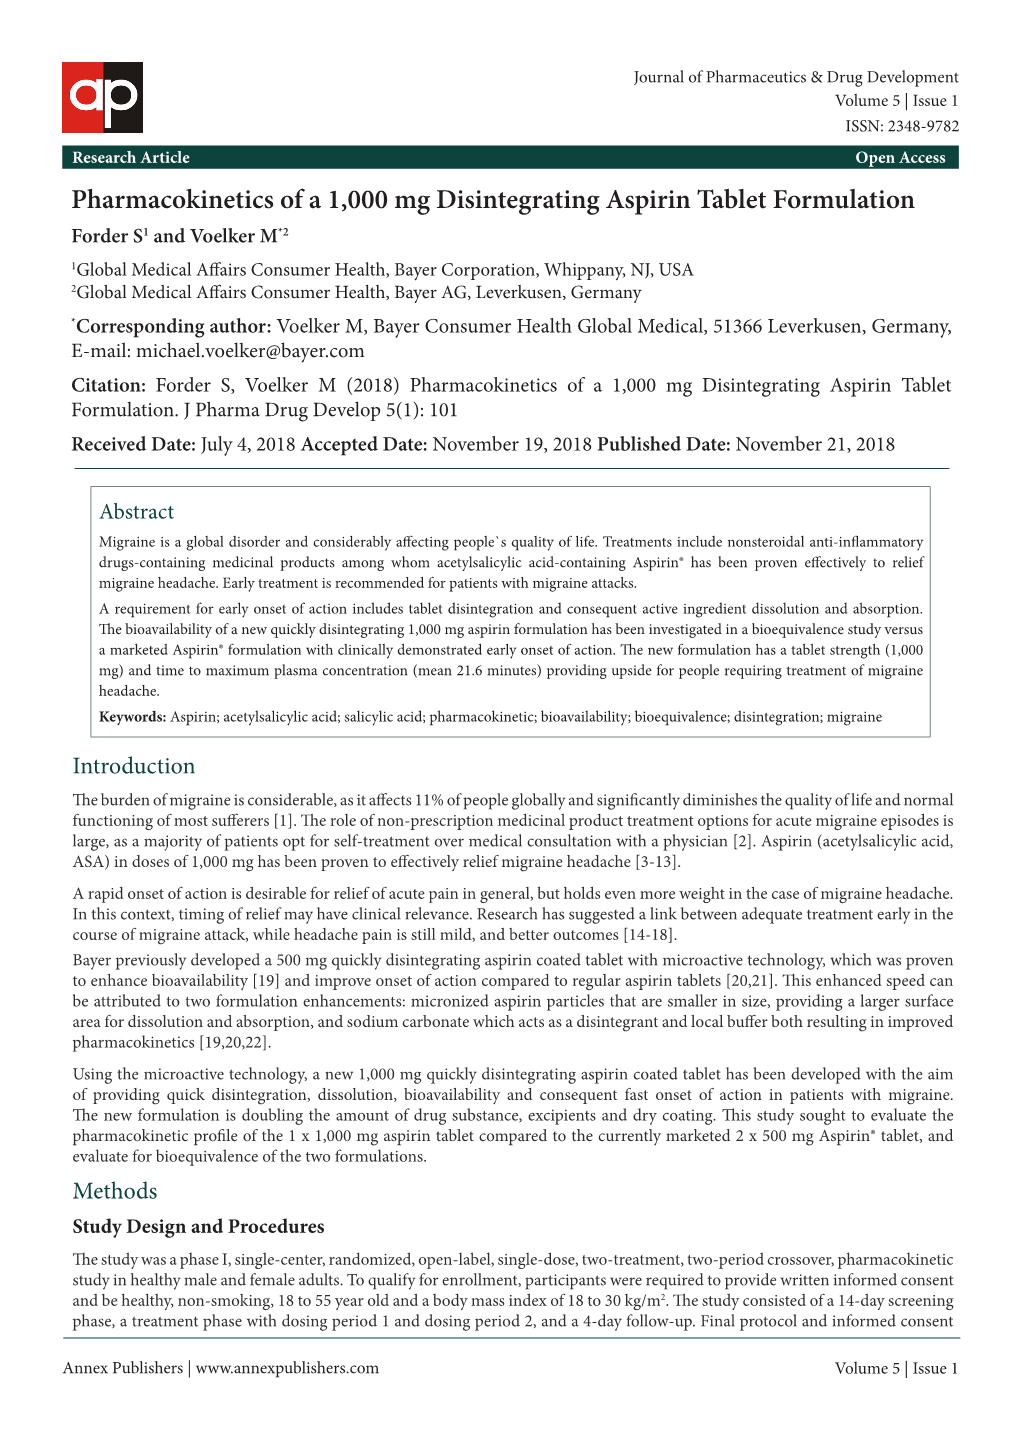 Pharmacokinetics of a 1,000 Mg Disintegrating Aspirin Tablet Formulation